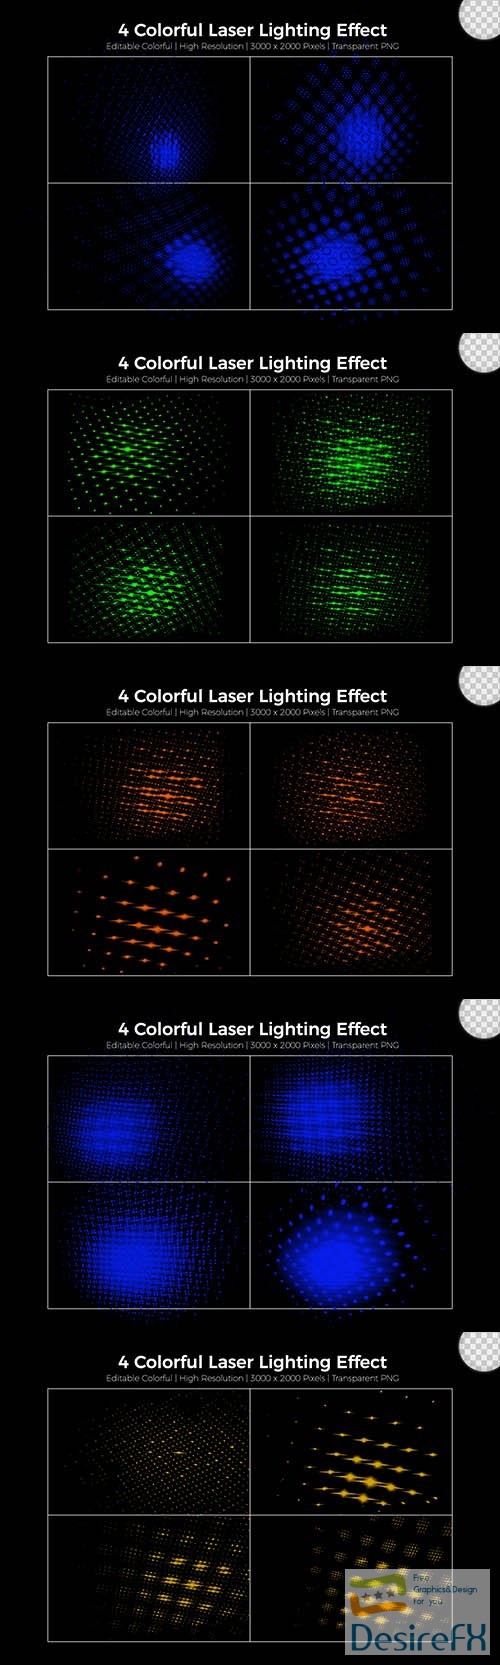 PSD realistic laser lighting effect